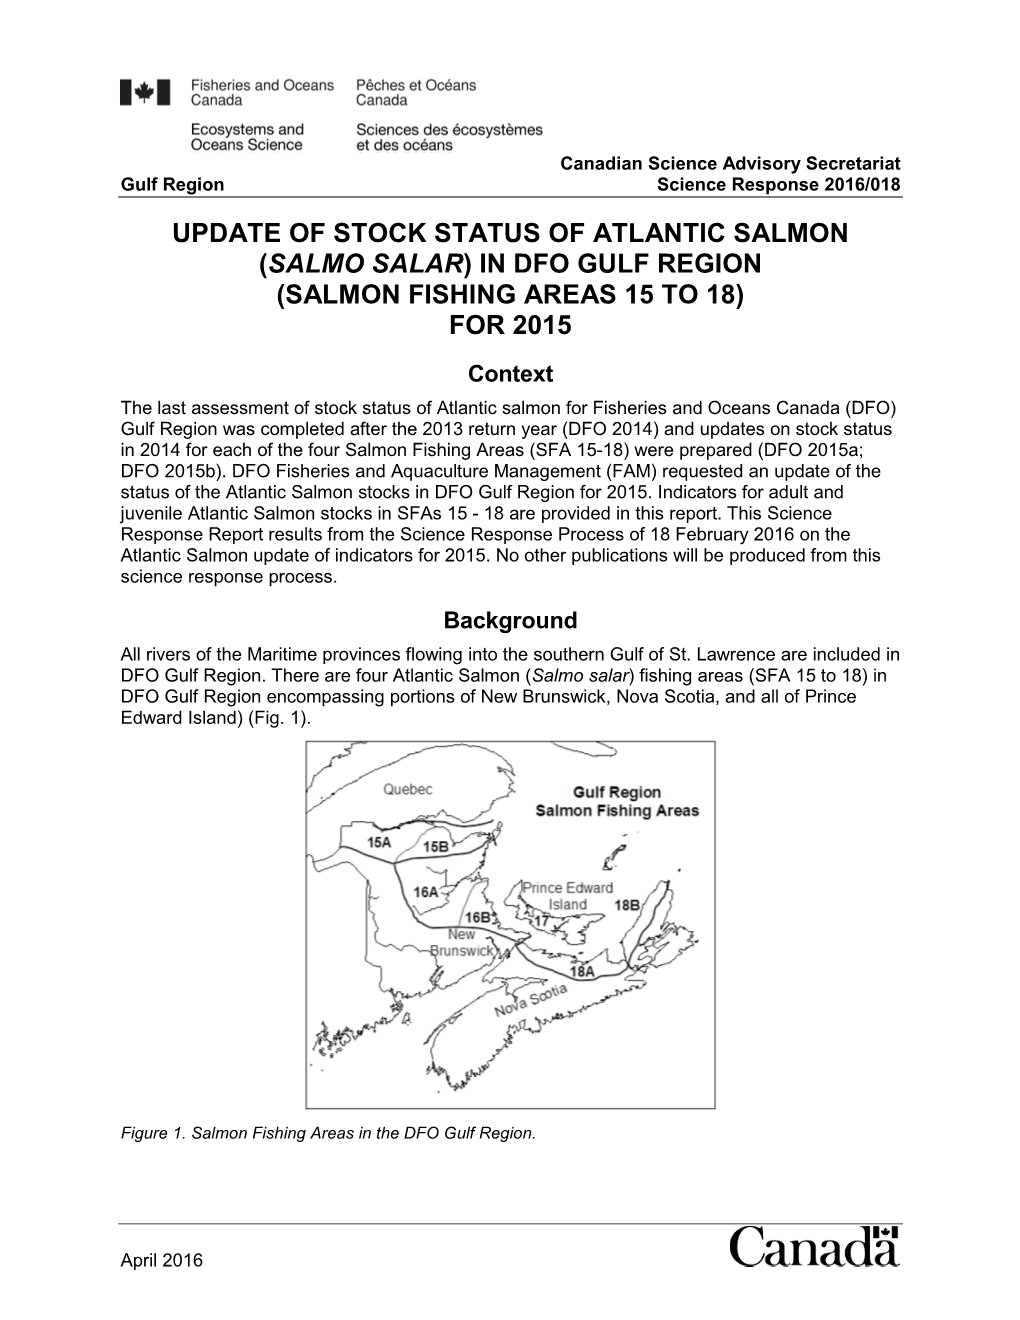 Update of Stock Status of Atlantic Salmon (Salmo Salar) in DFO Gulf